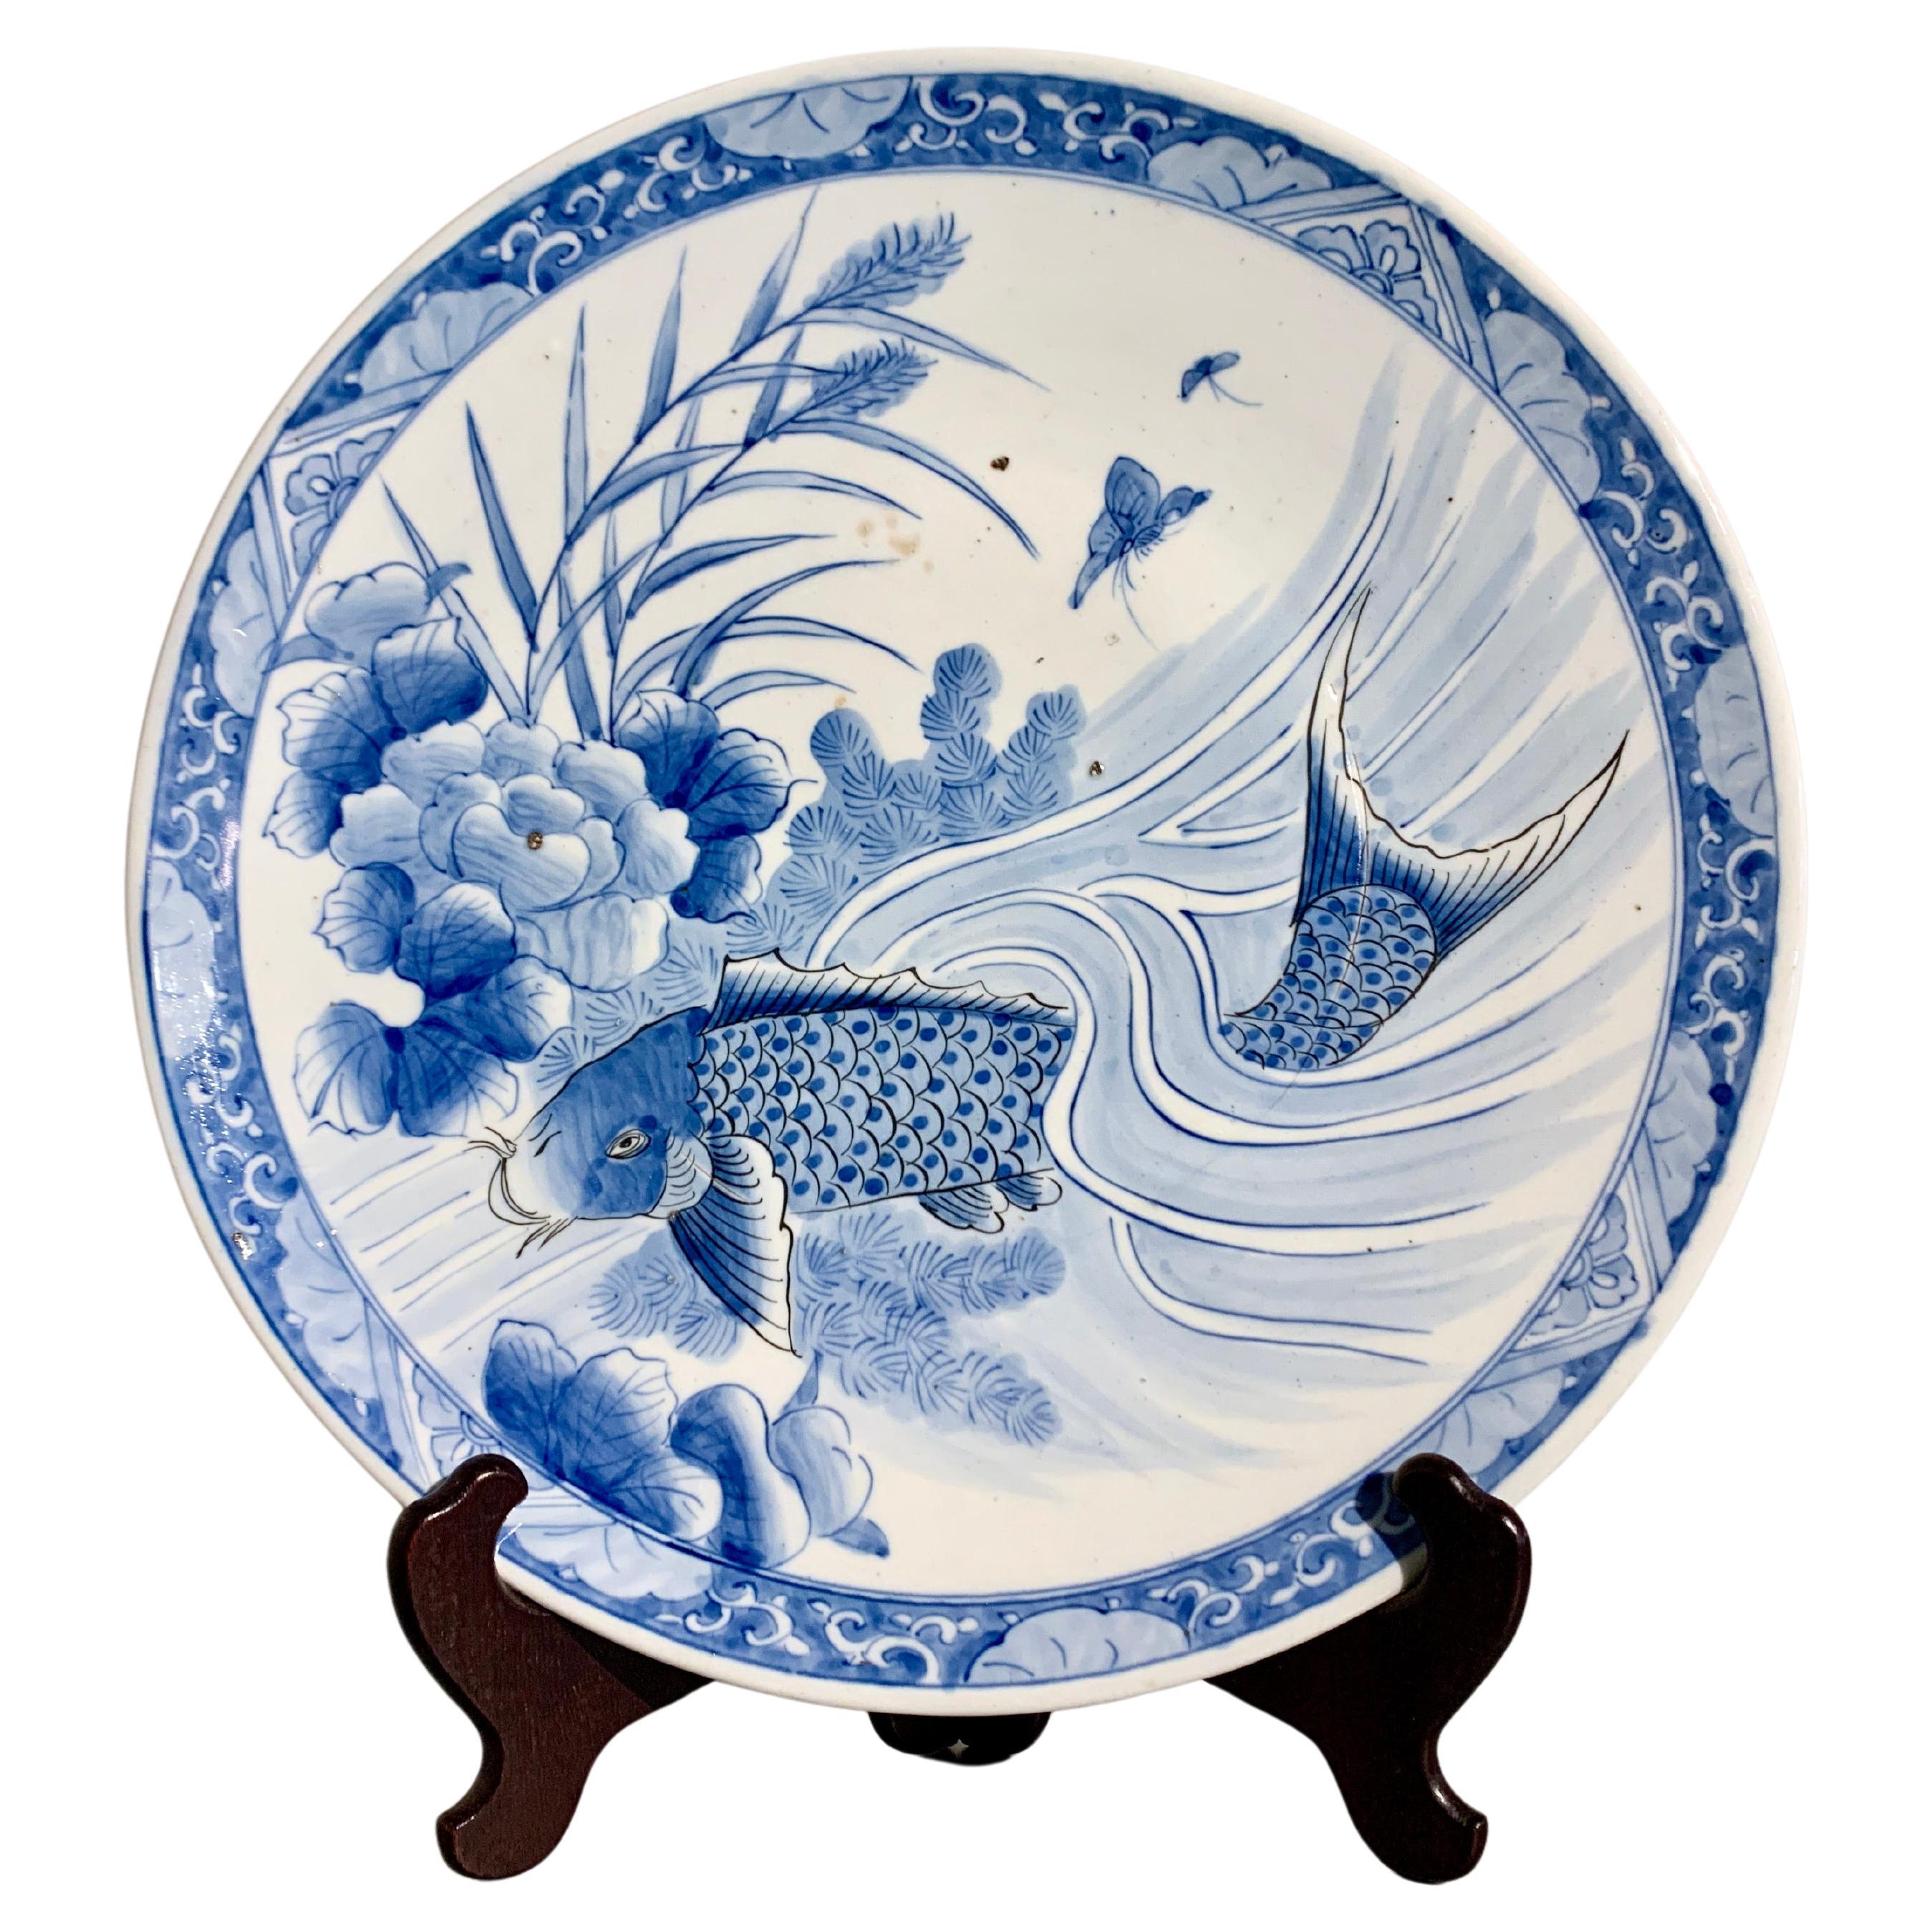 Large Japanese Blue and White Arita Porcelain Charger, Edo Period, 19th C, Japan